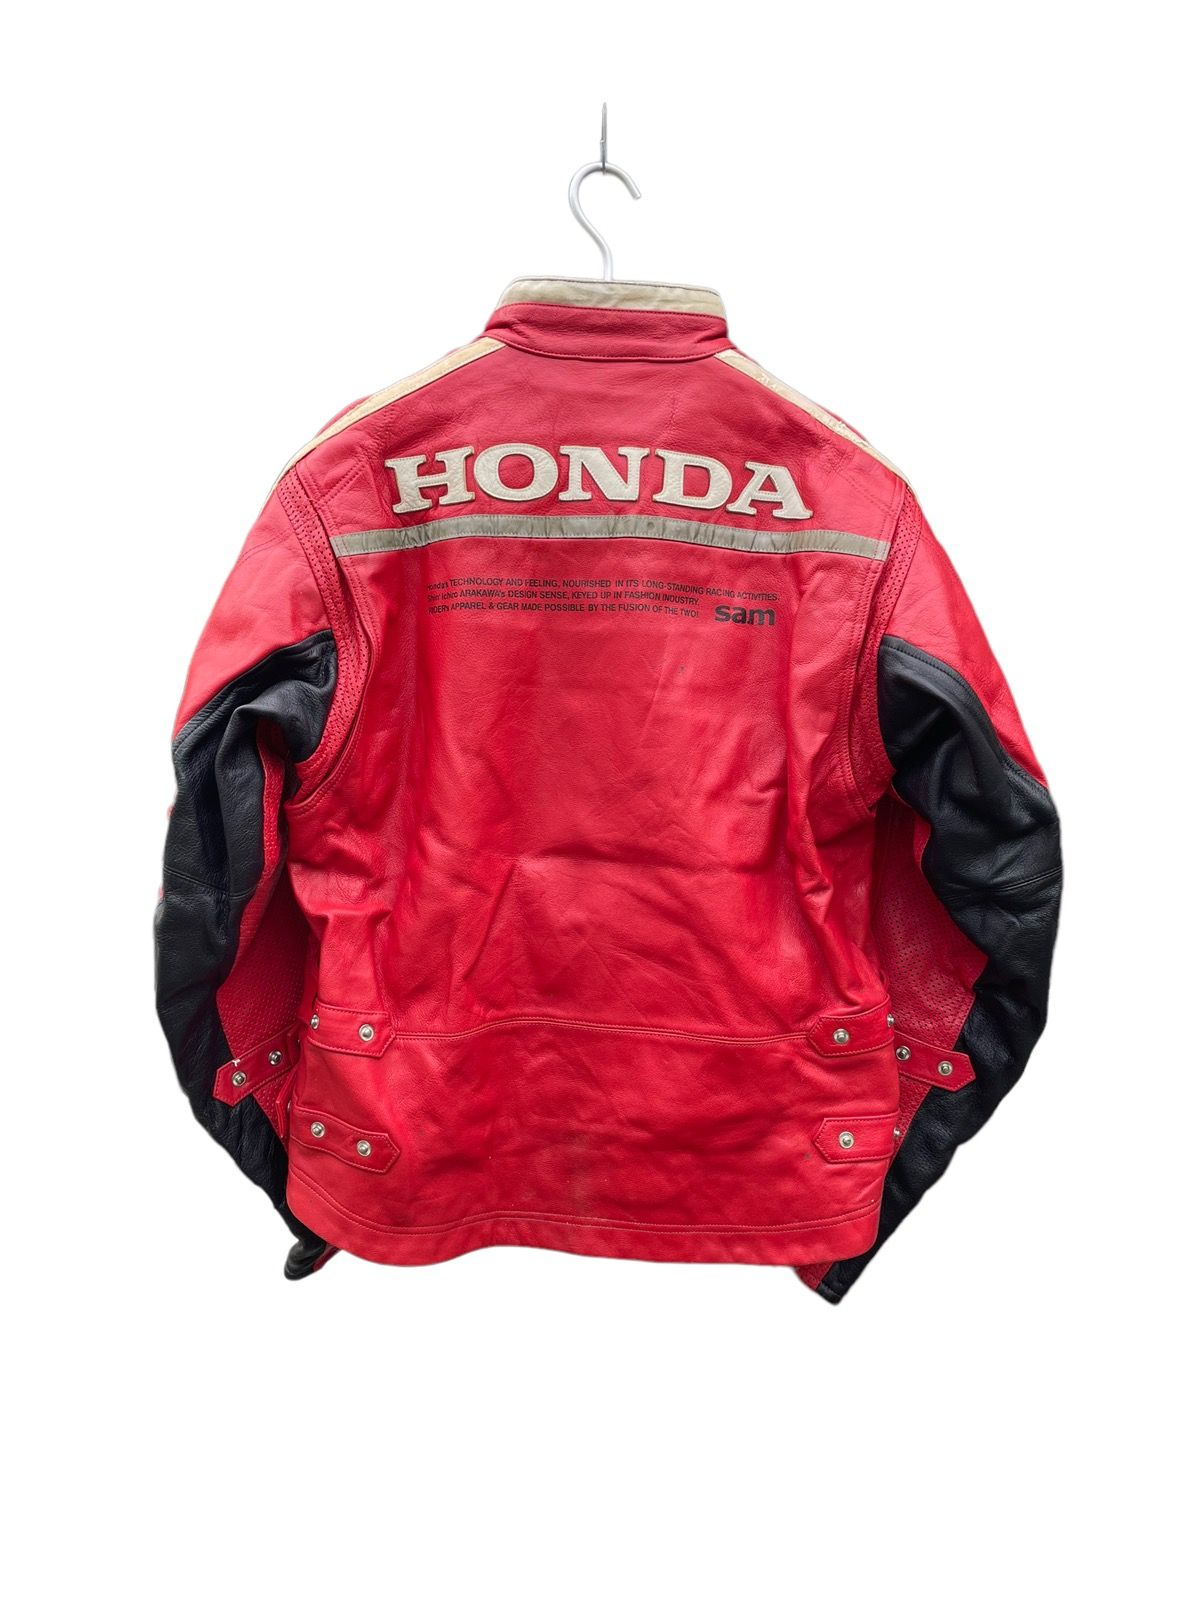 Honda Honda Leather Riding Jacket Size US L / EU 52-54 / 3 - 1 Preview